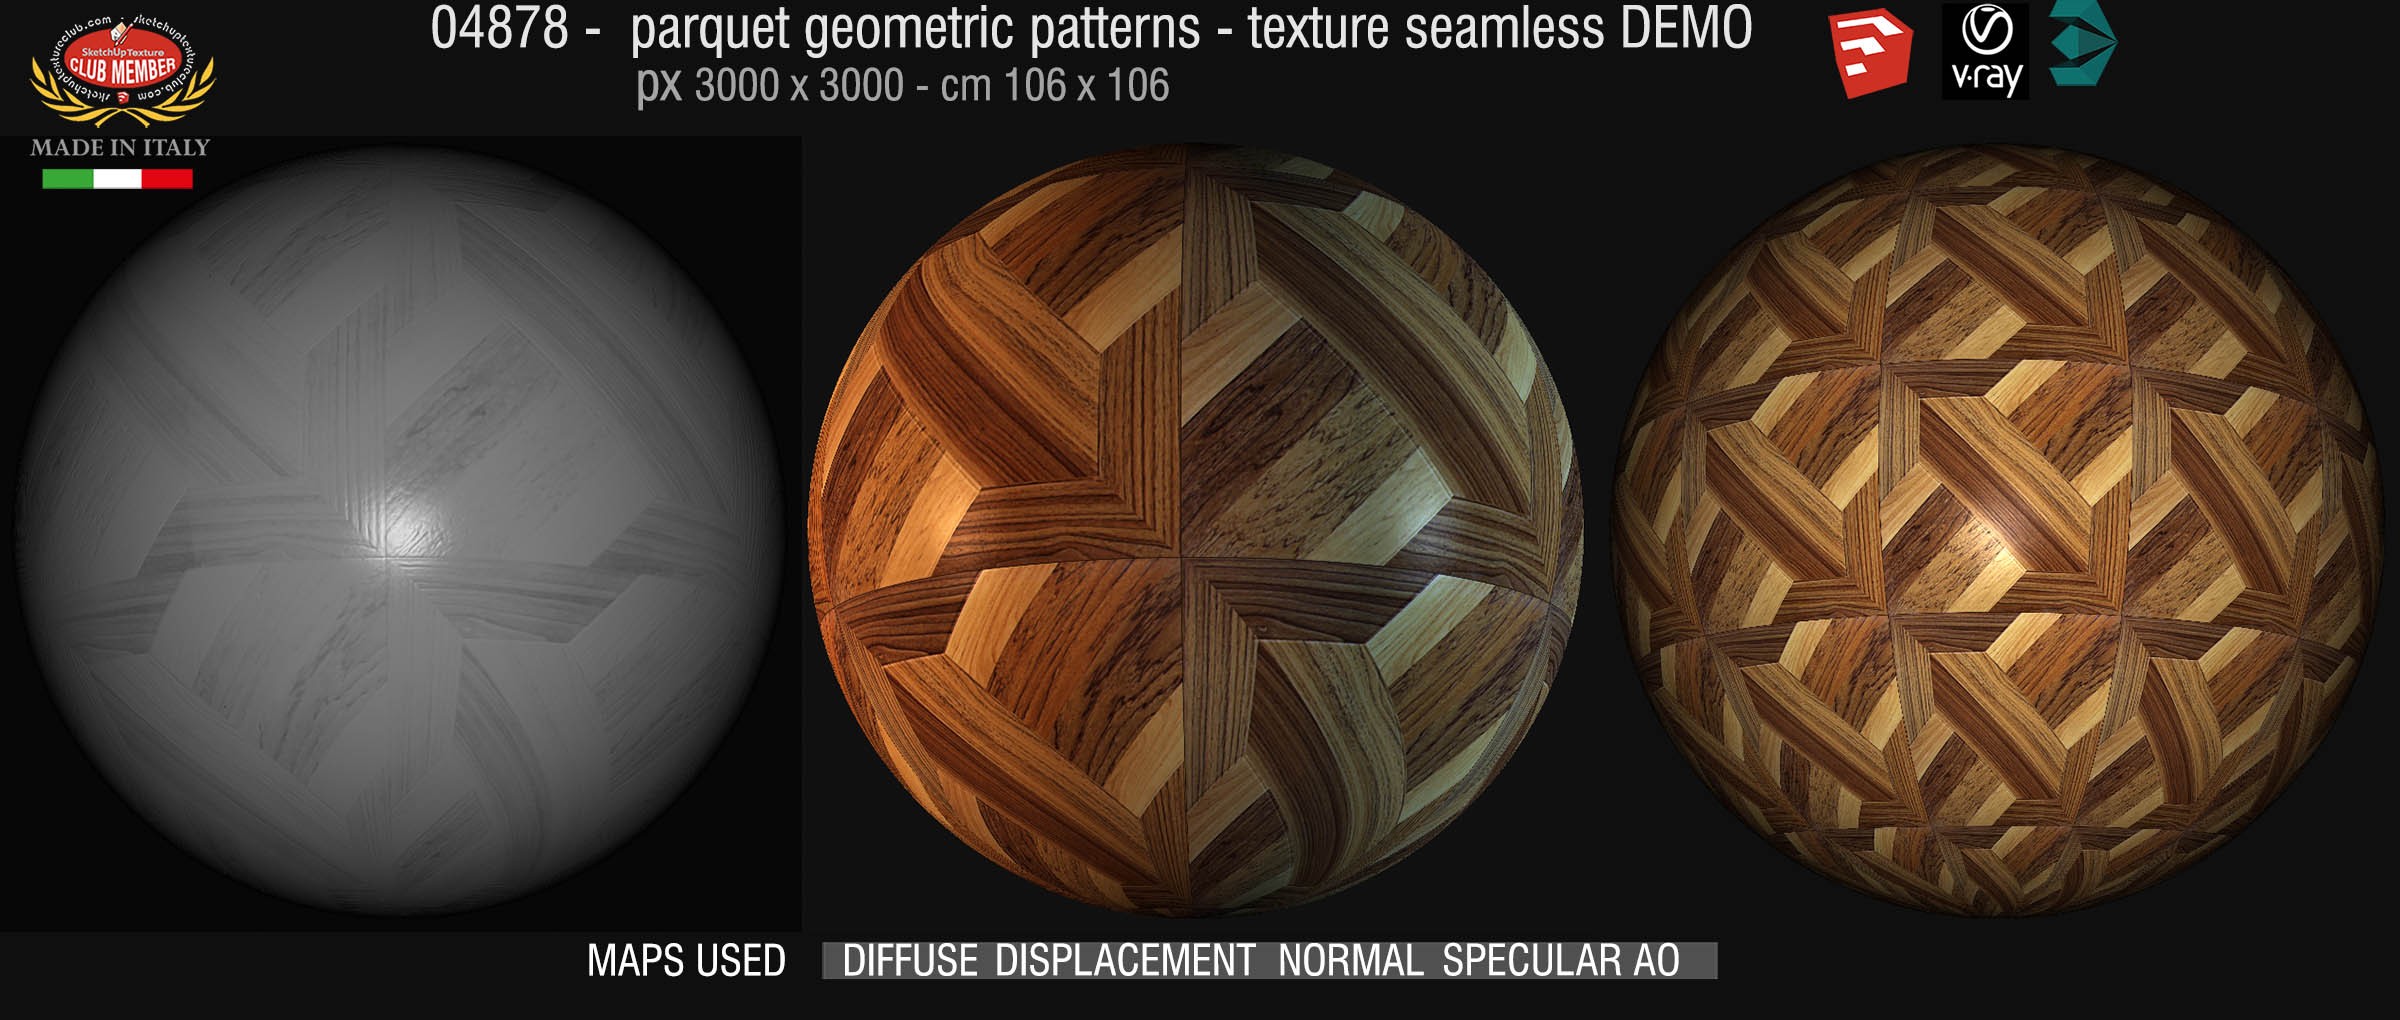 04878 Parquet geometric pattern texture seamless + maps DEMO